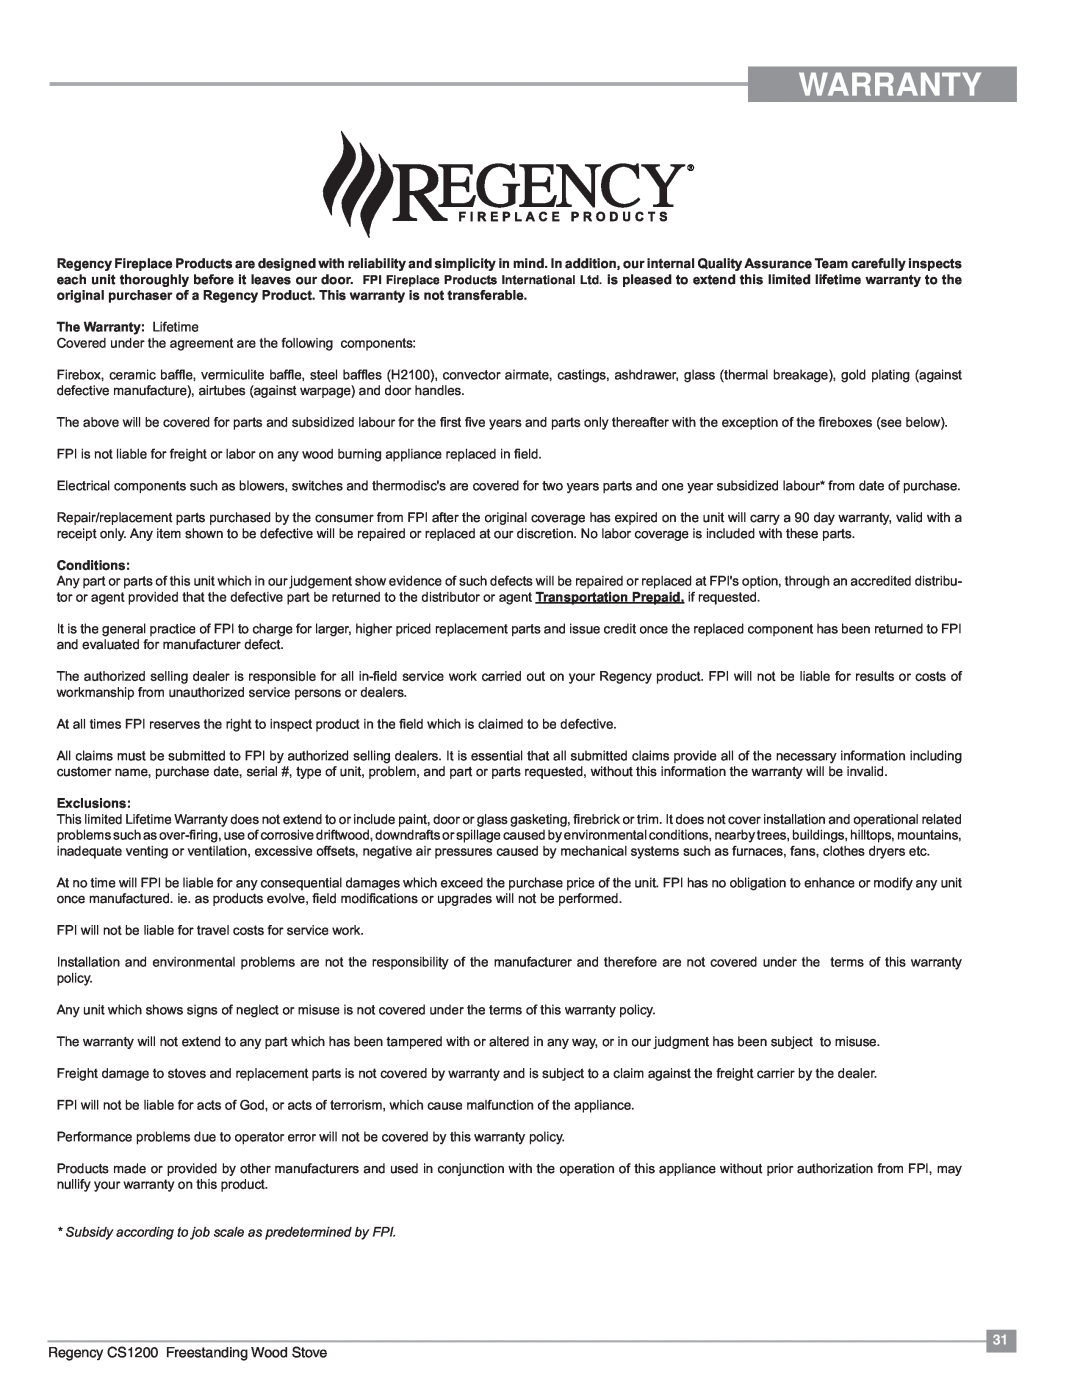 Regency CS1200 installation manual The Warranty Lifetime, Conditions, Exclusions 